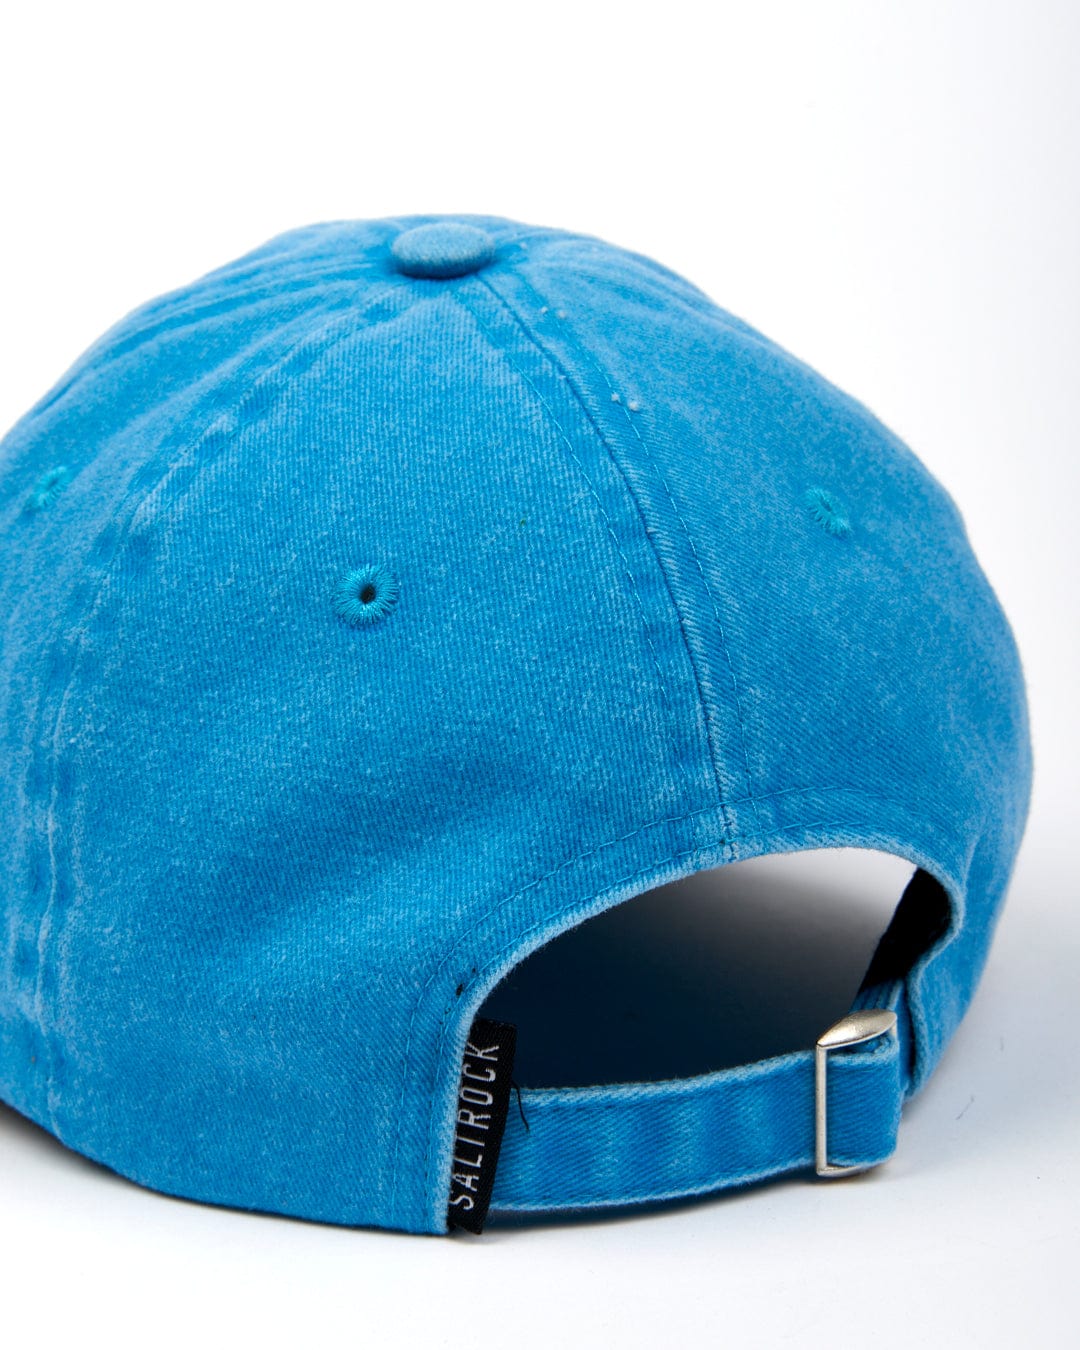 Saltrock Palm Cap - Blue with adjustable strap.